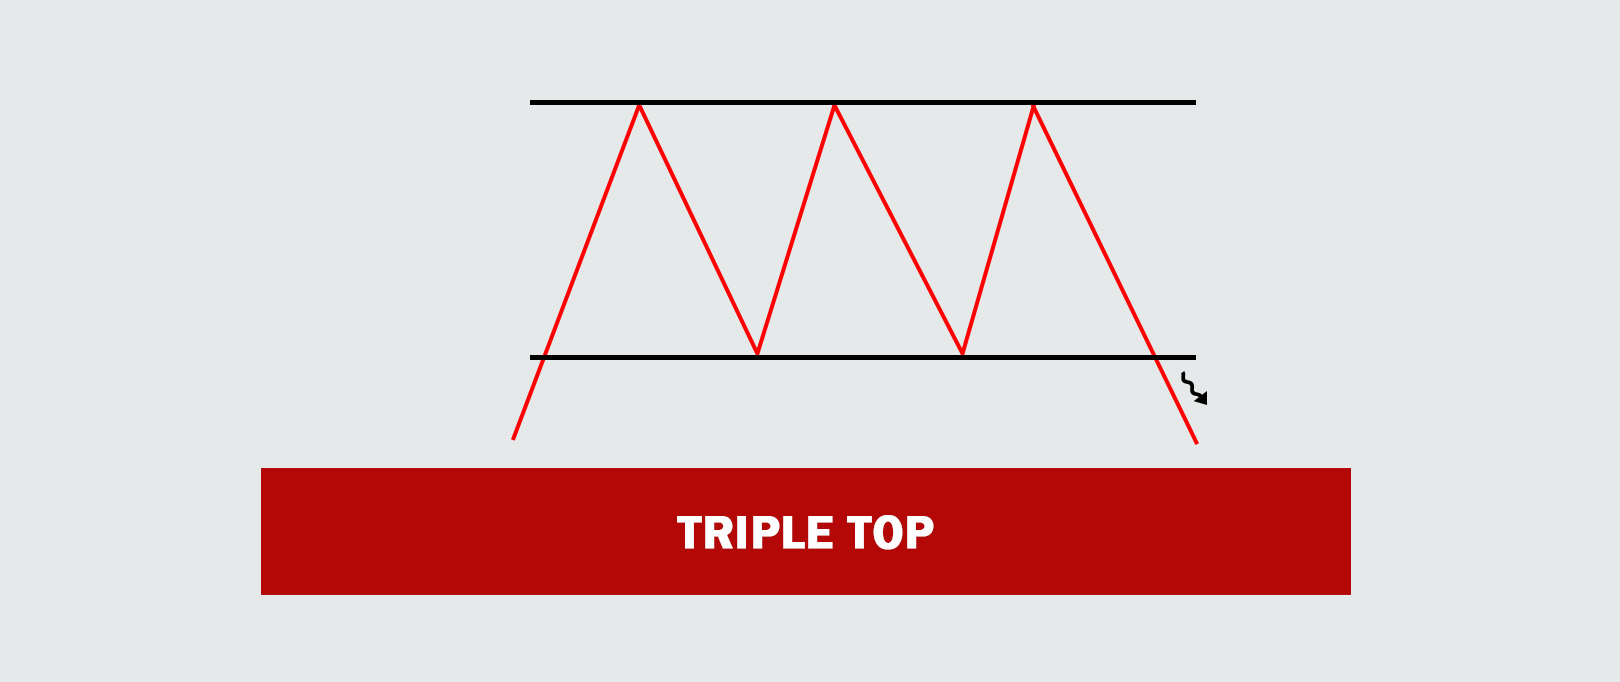 Triple Top Forex Trading Chart Pattern